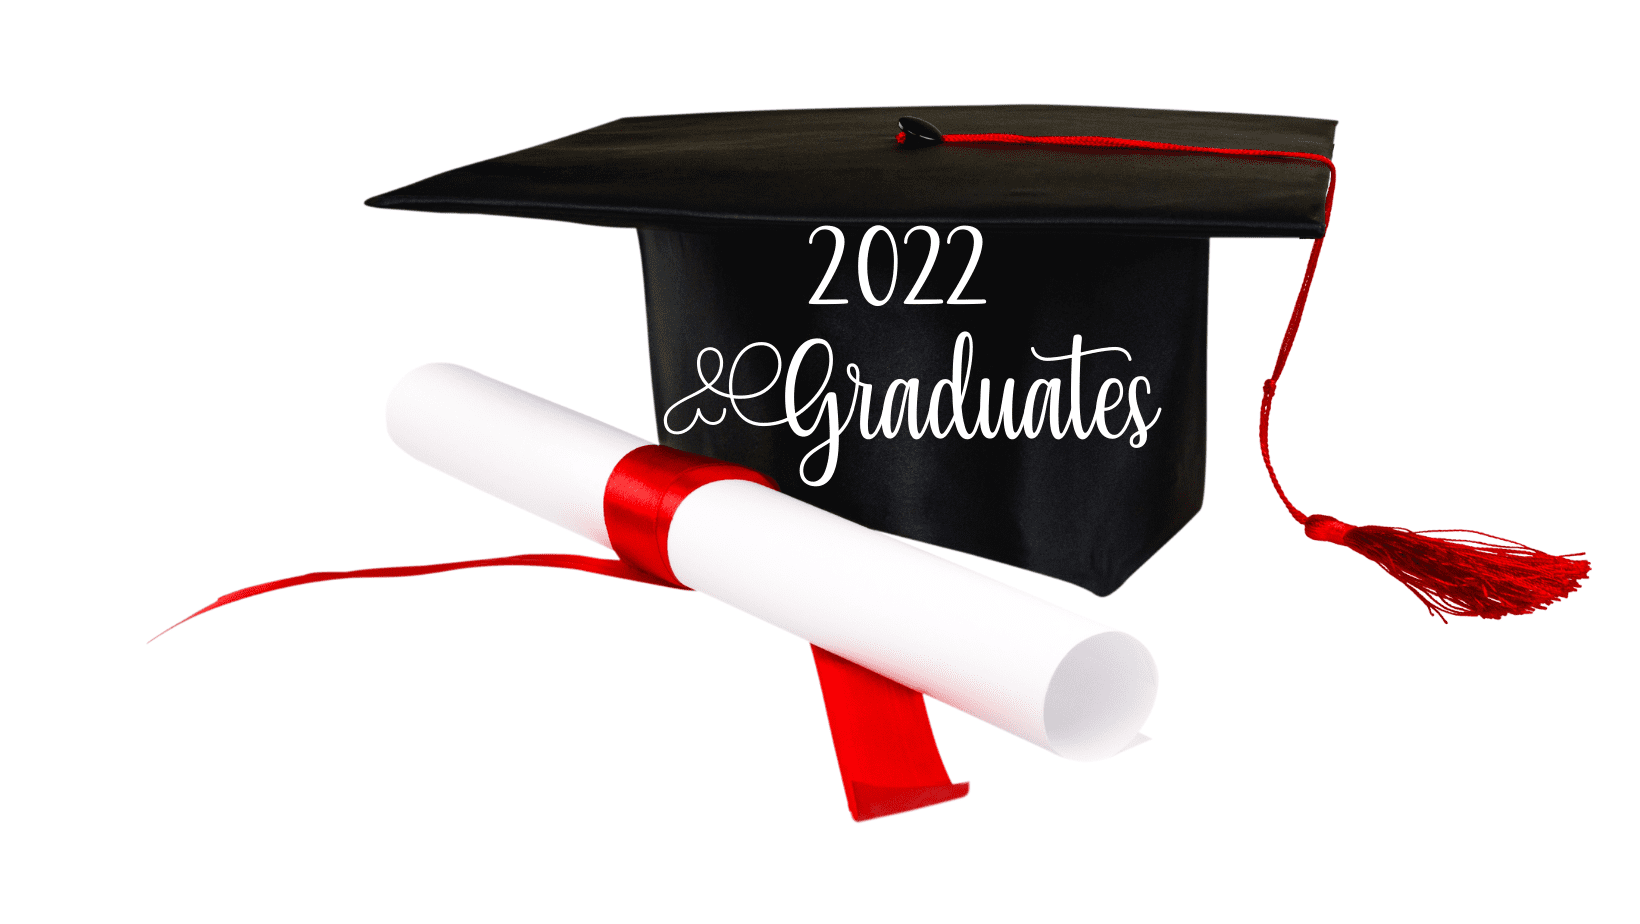 Congratulations to our 2022 Graduates